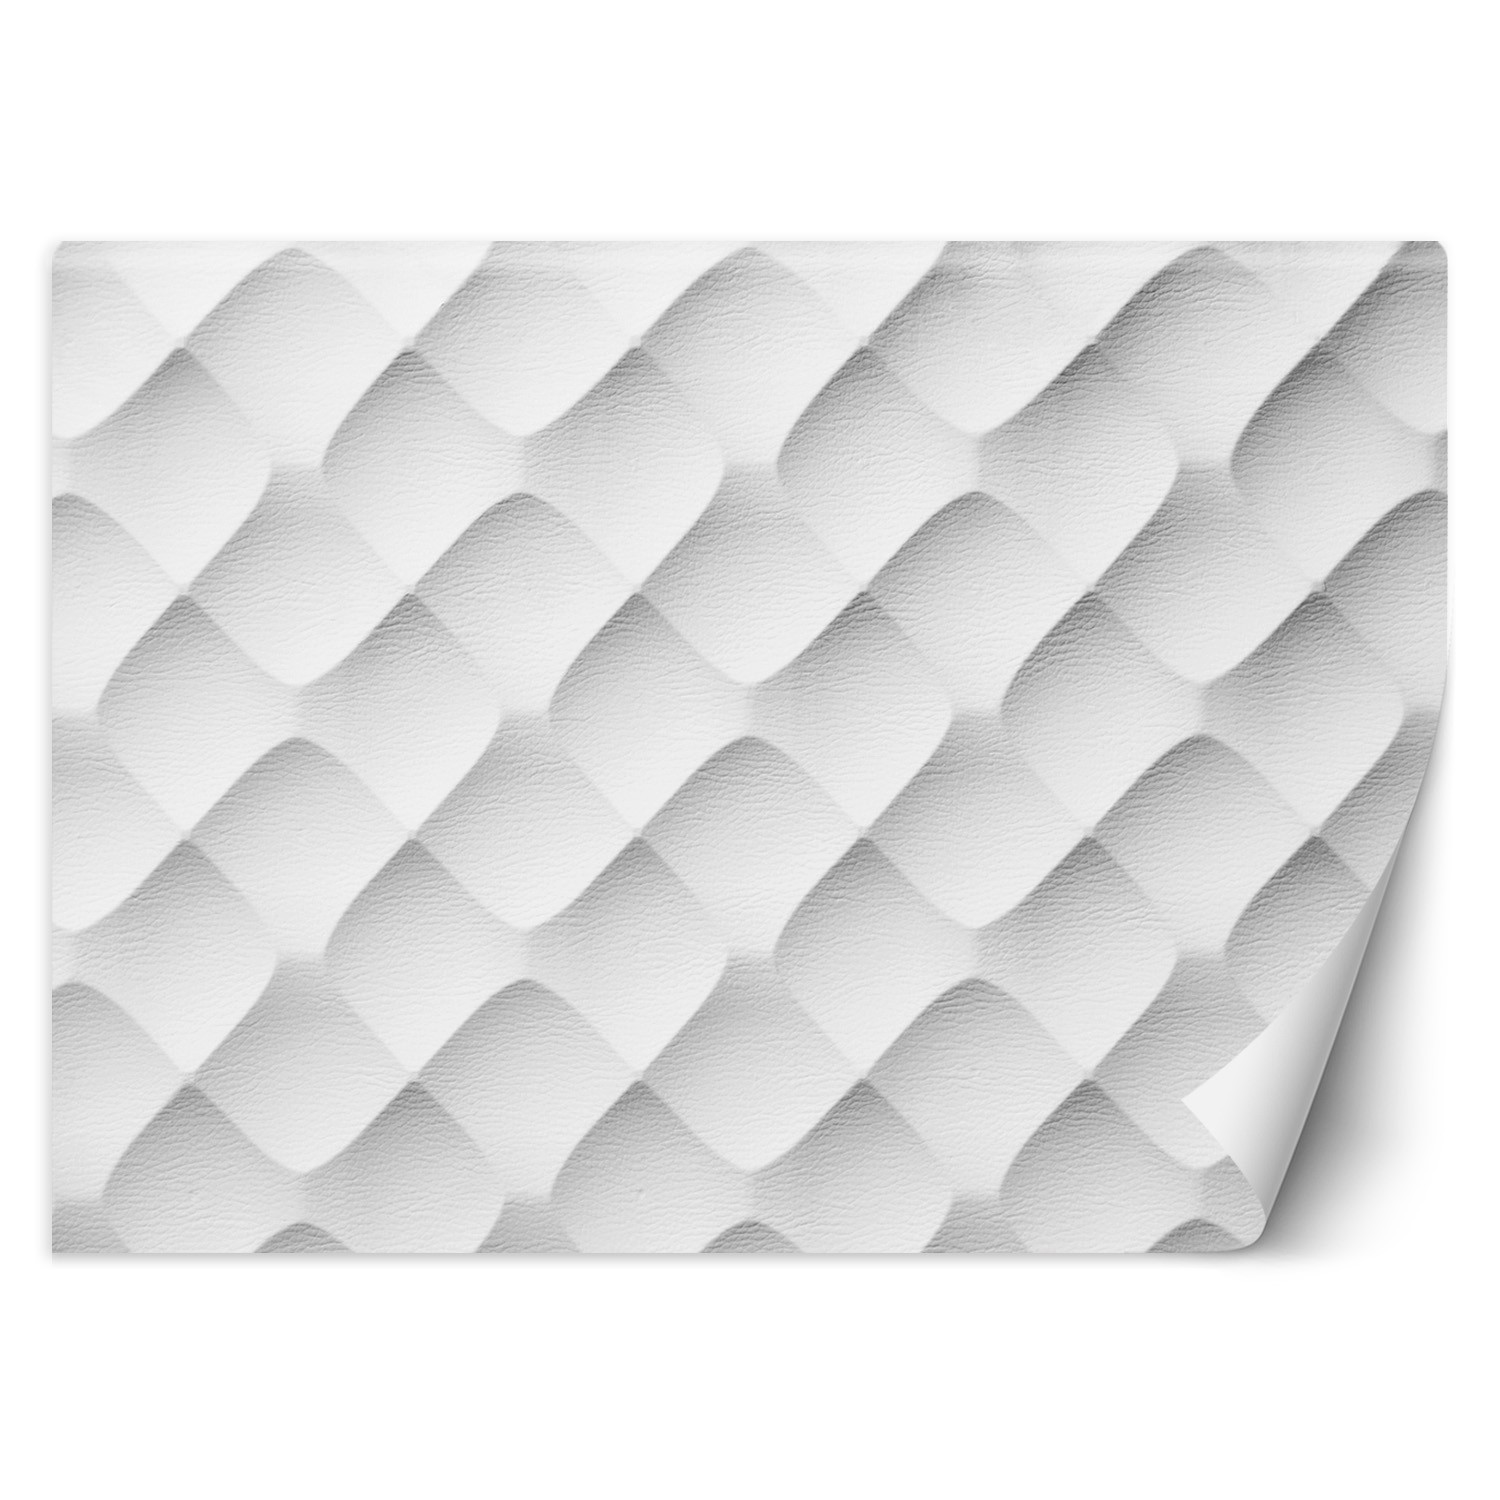 Trend24 – Behang – Abstract Patroon – Vliesbehang – Fotobehang 3D – Behang Woonkamer – 350x245x2 cm – Incl. behanglijm